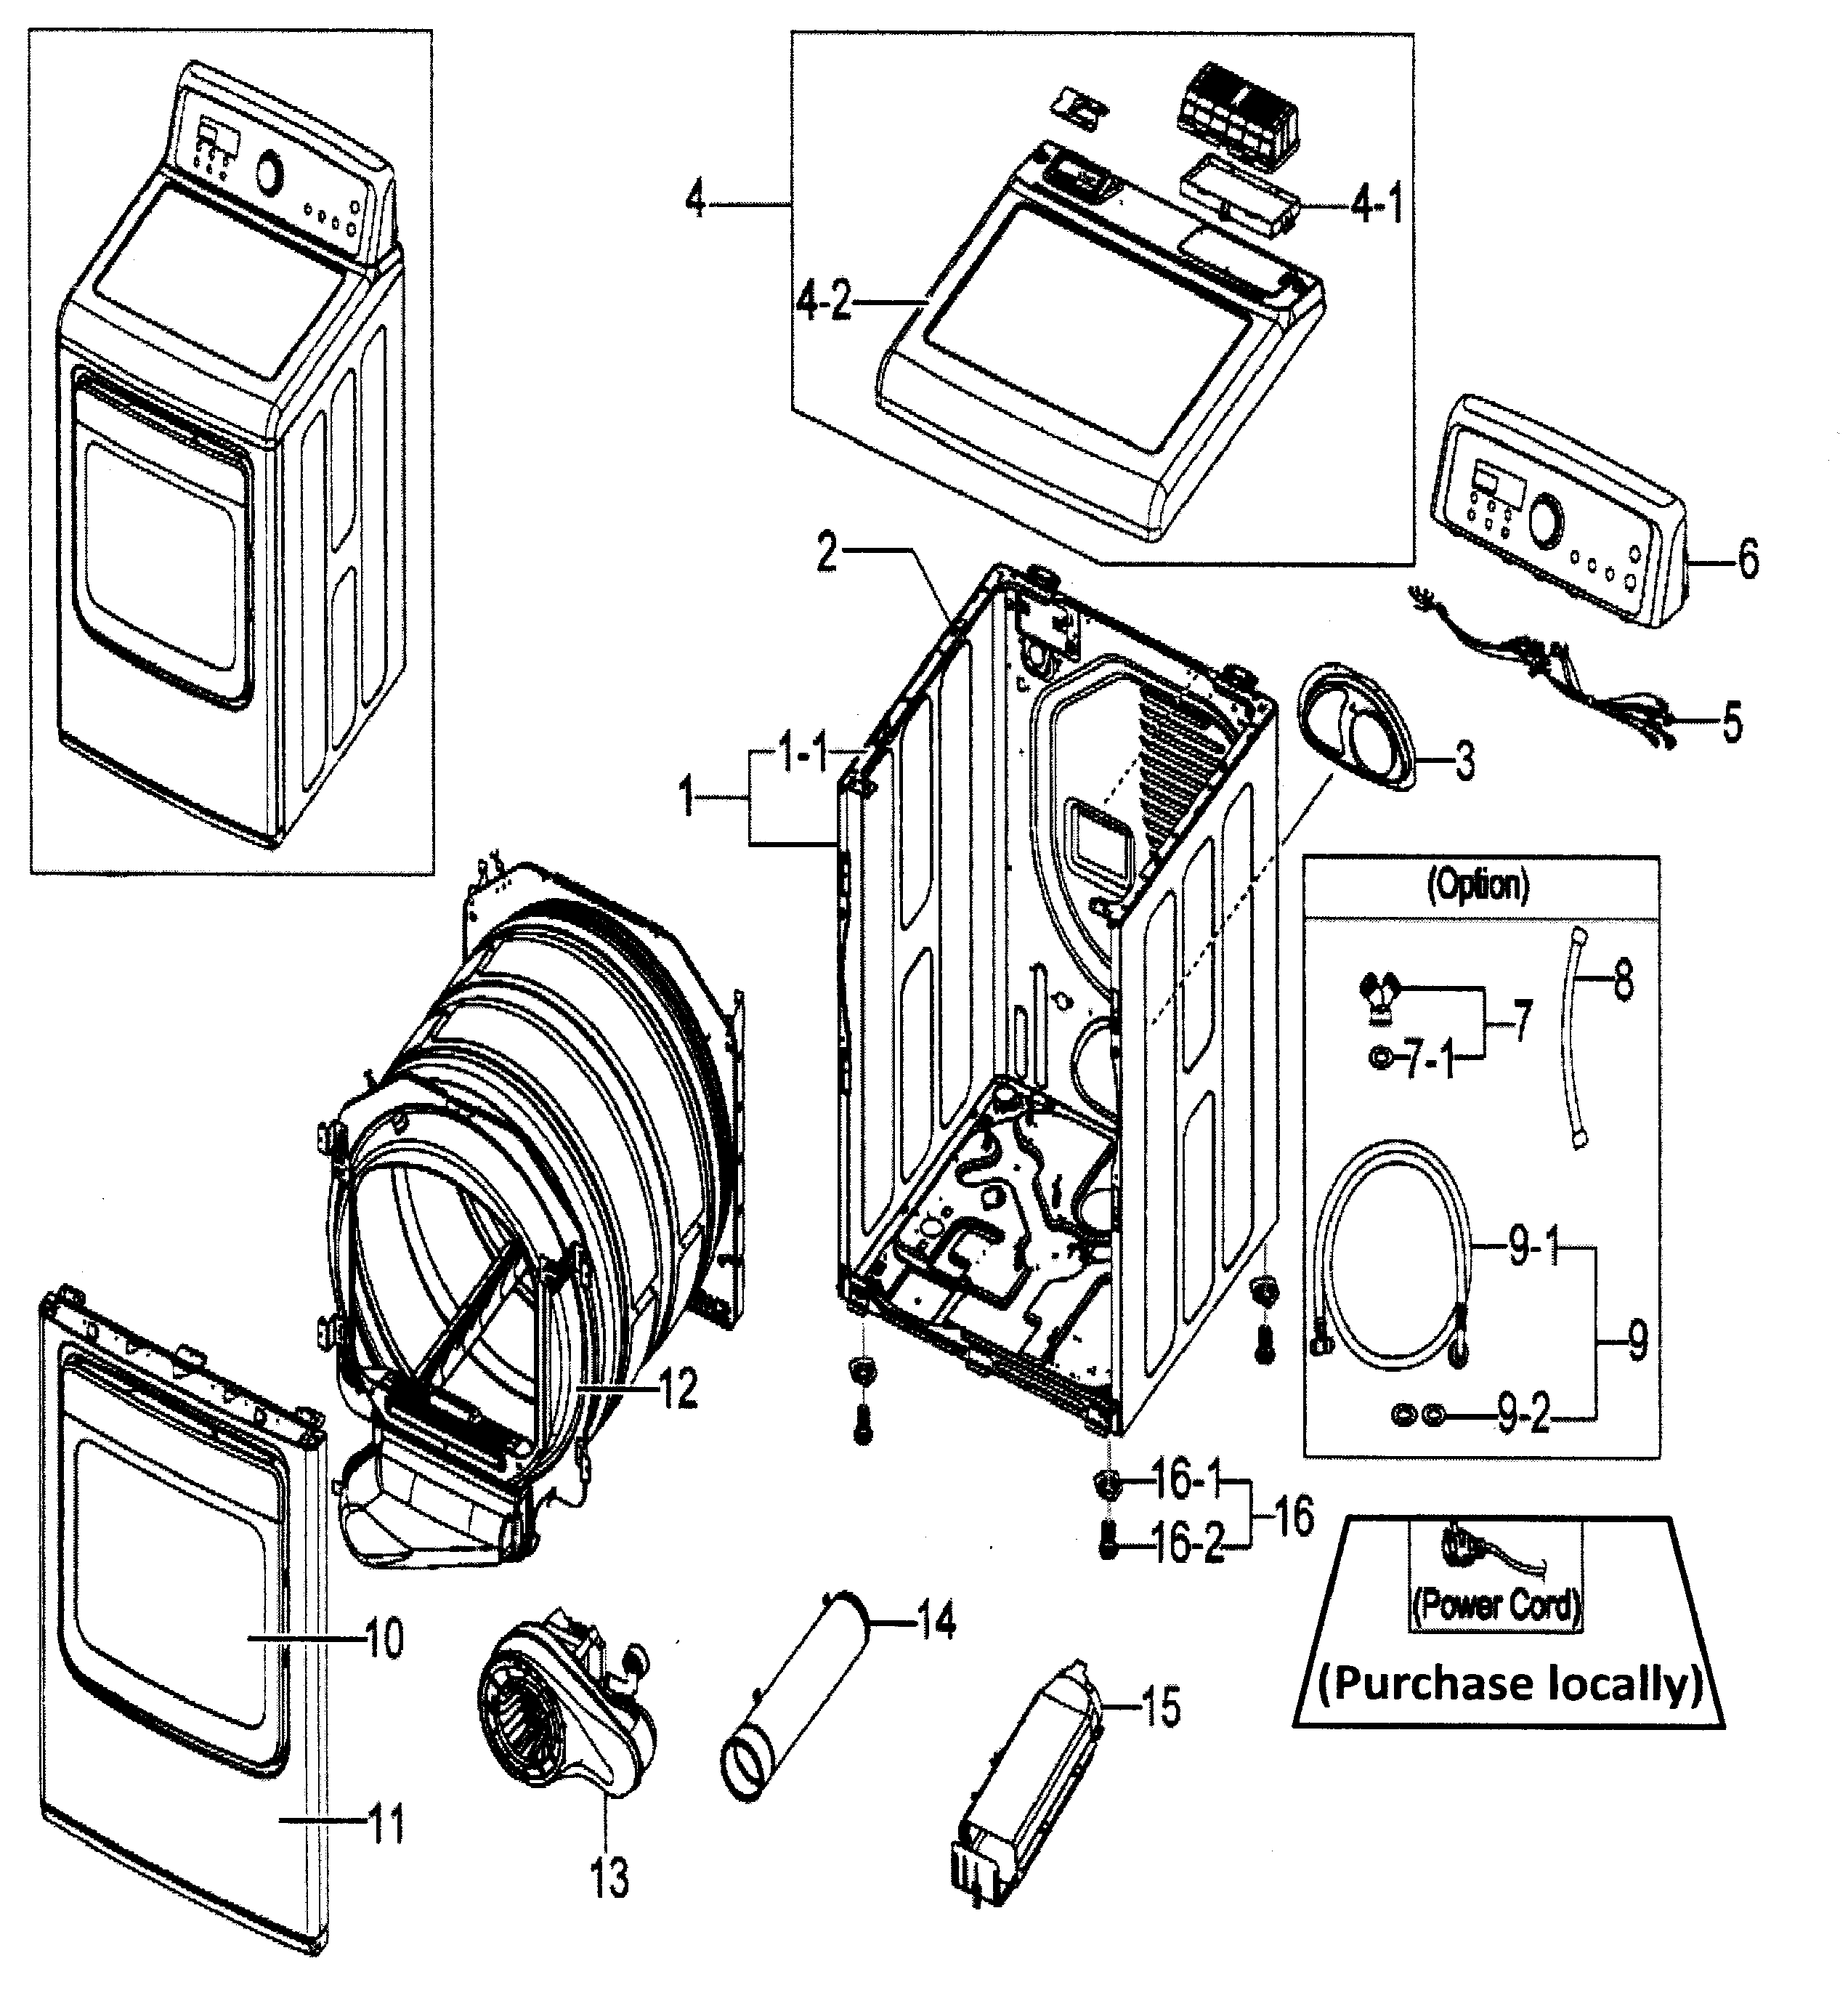 34 Samsung Dryer Parts Diagram